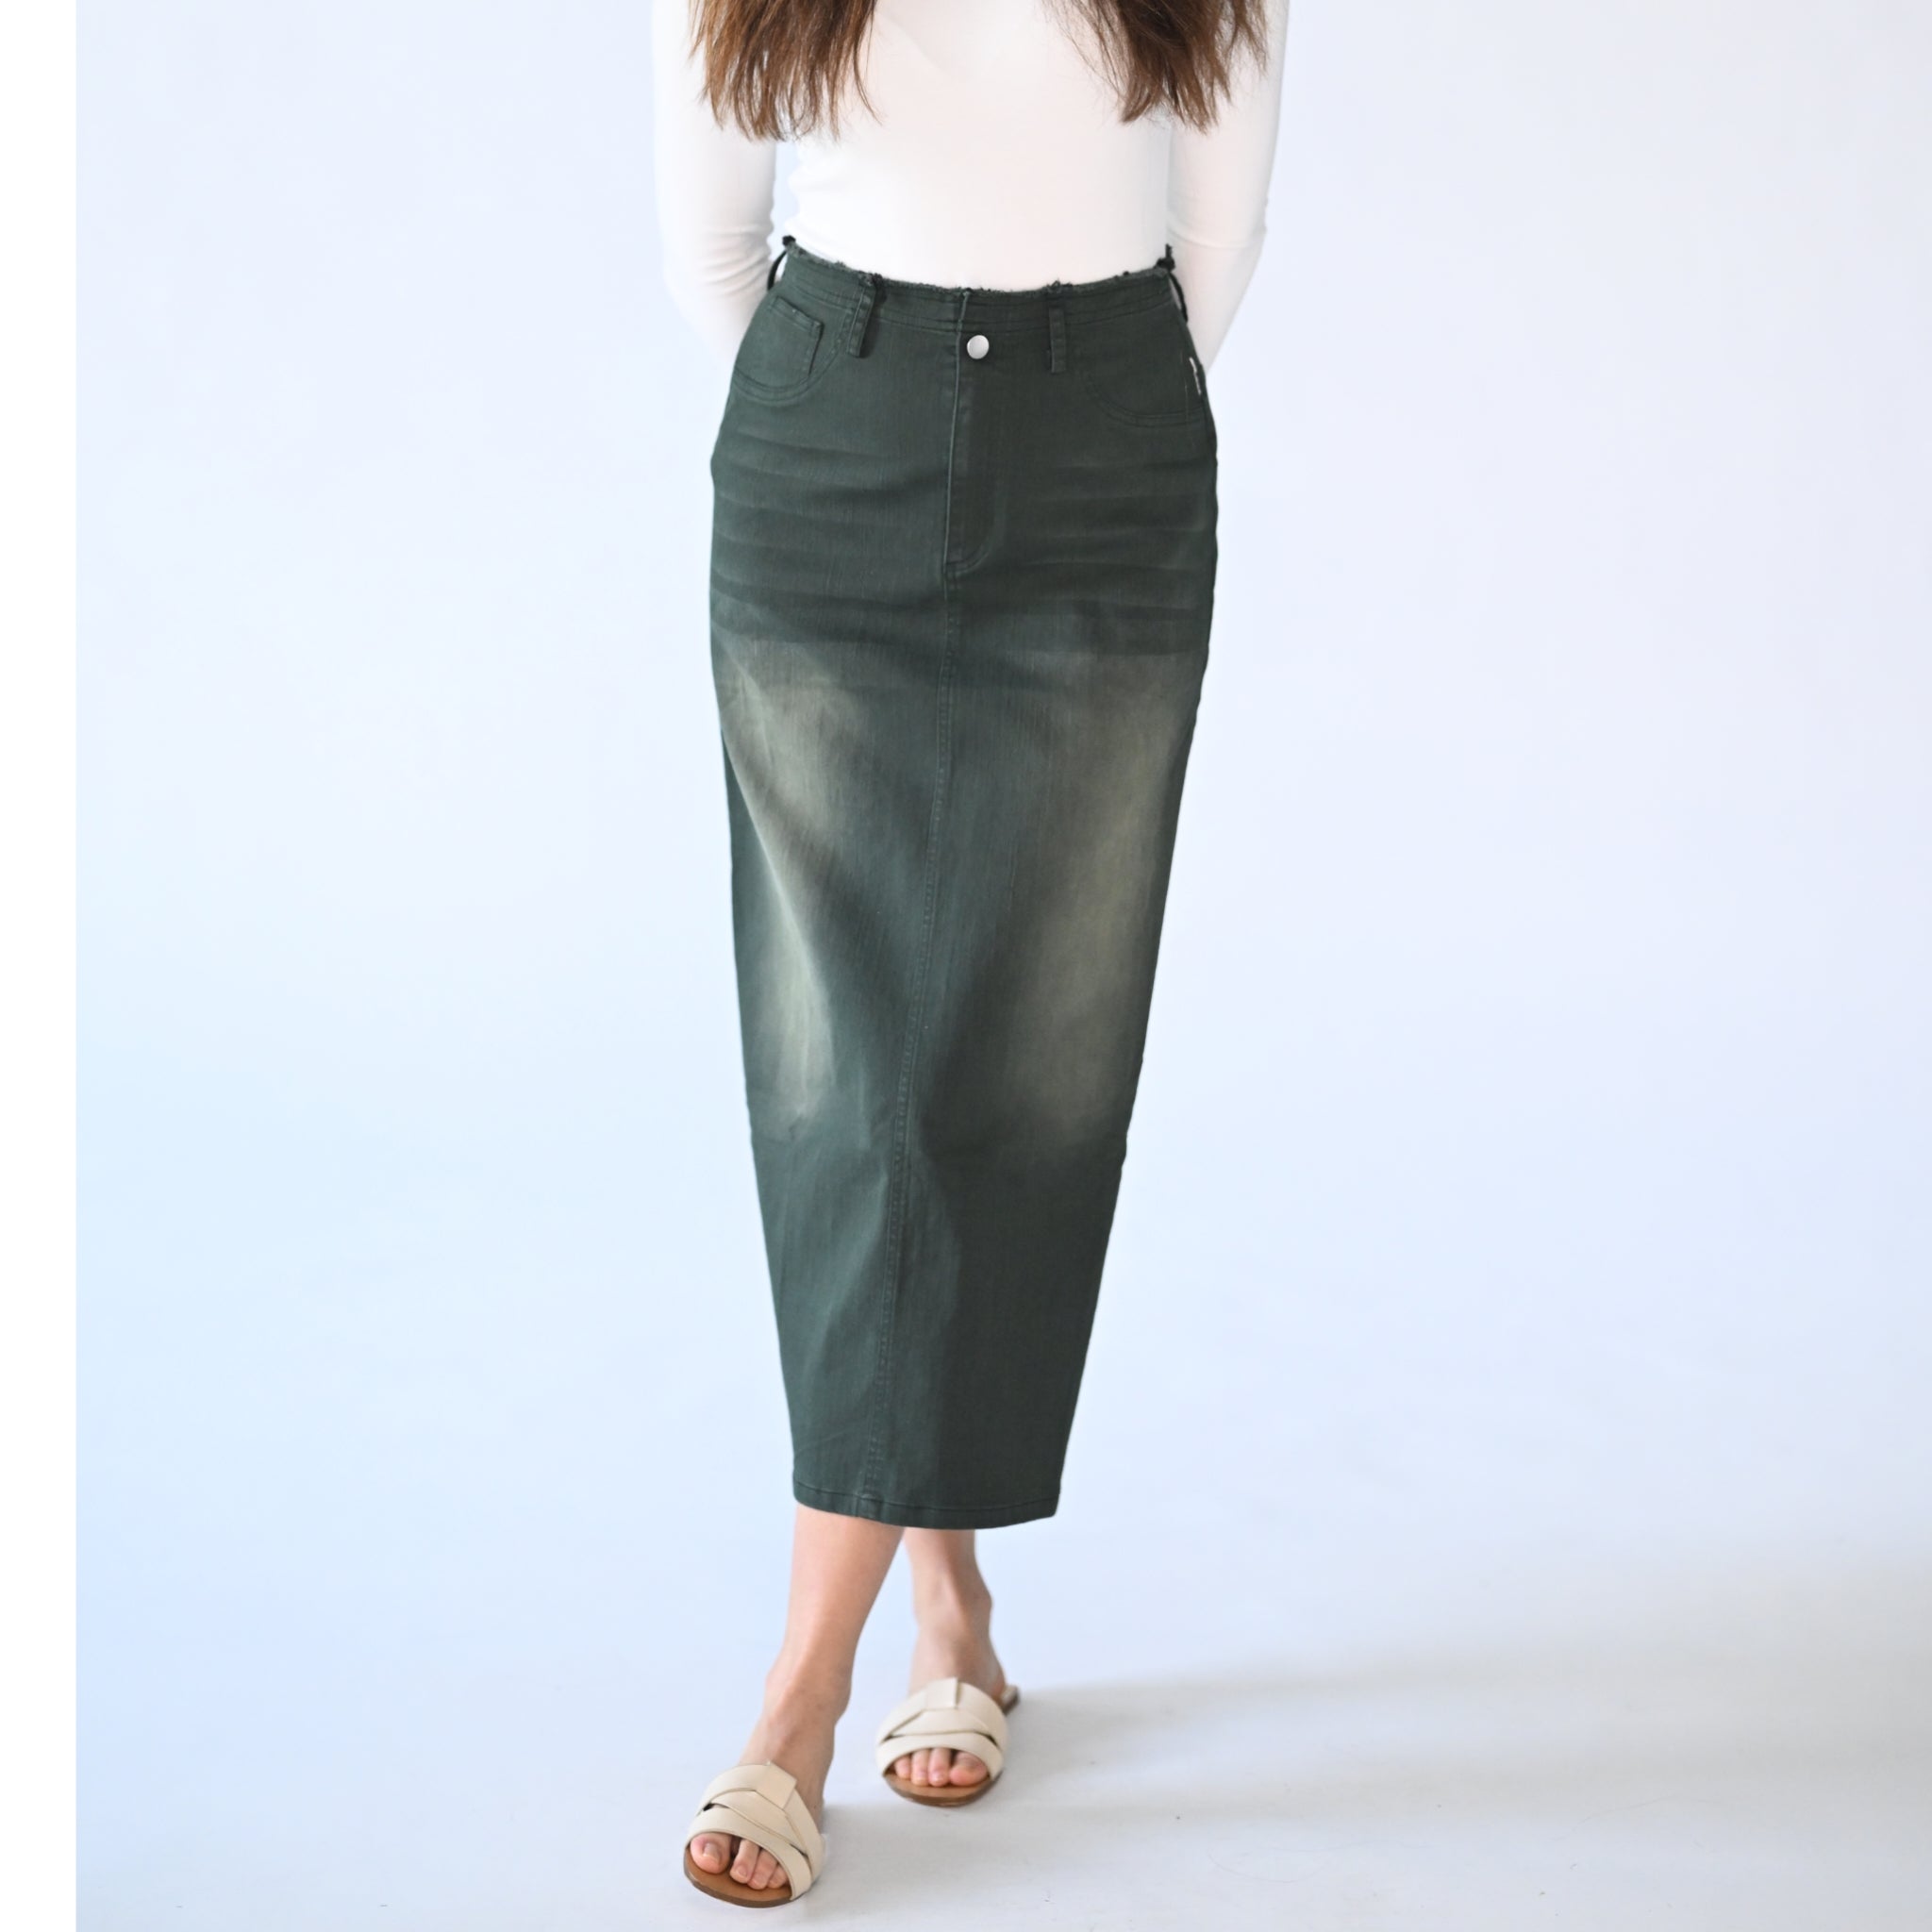 Jessica London Women's Plus Size True Fit Front Button Casual Denim Skirt -  36 W, Dark Olive Green : Target